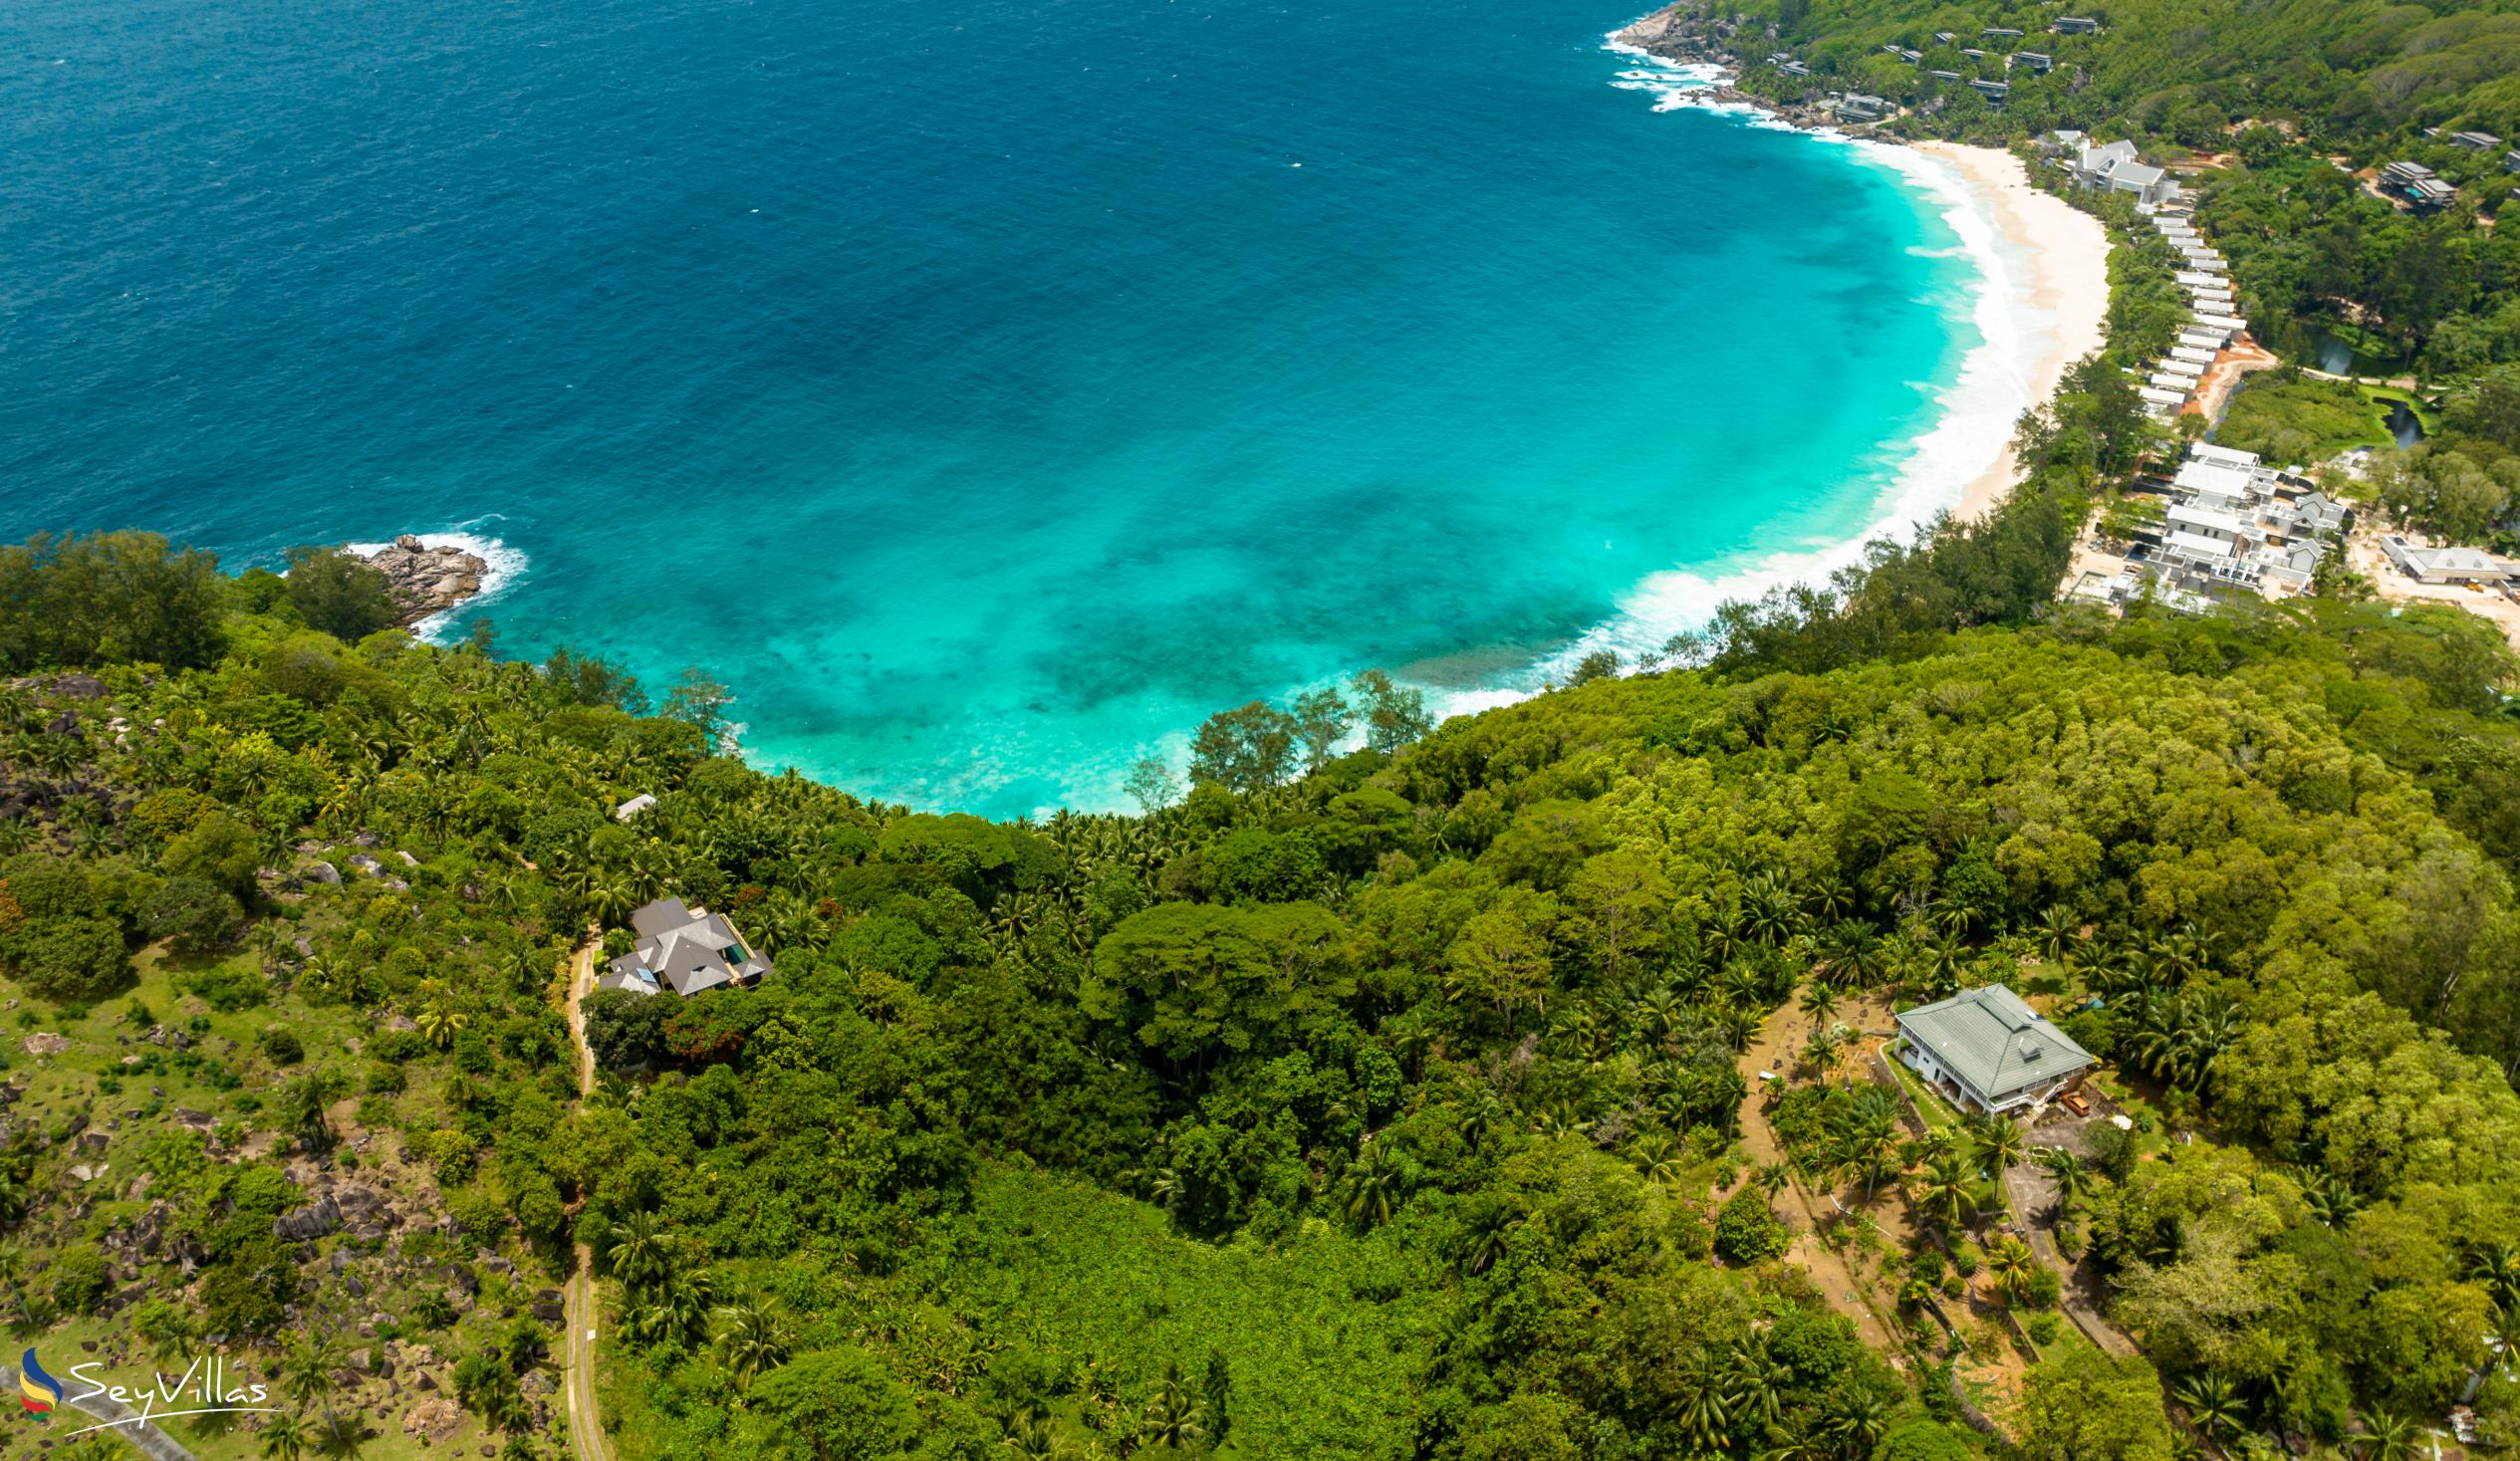 Foto 64: Villa Gazebo - Location - Mahé (Seychelles)